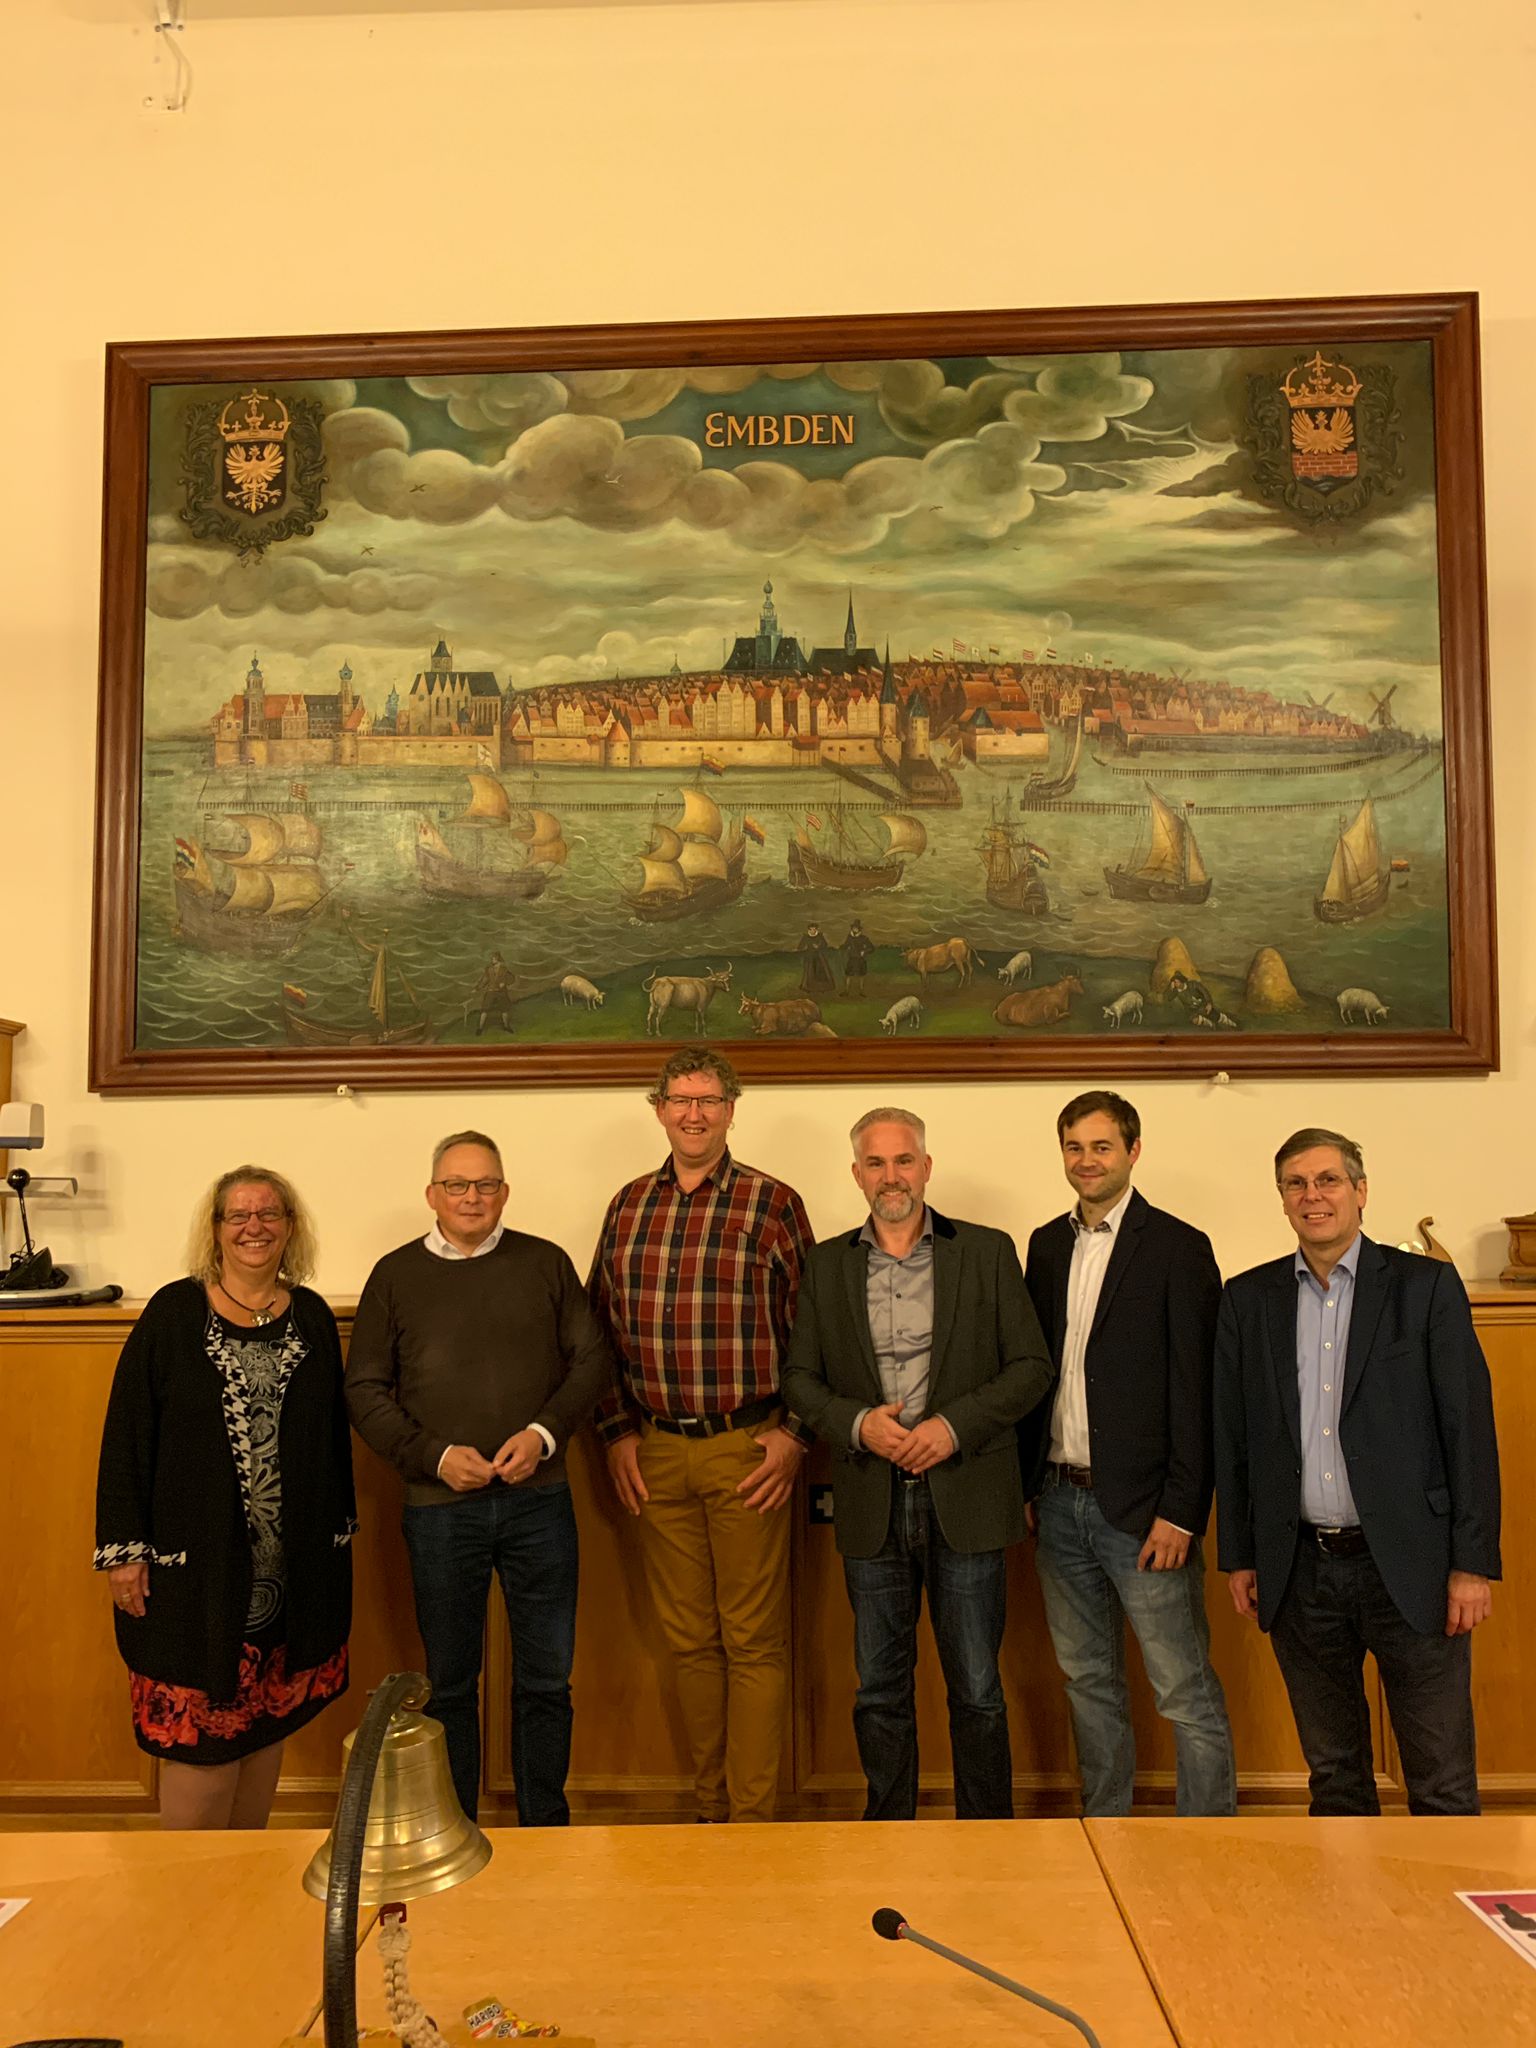 Von links nach rechts:
Andrea Risius, Bernd Gröttrup, Albert Ohling, Gerold Verlee, Wilke Held, Reinhard Hegewald
Es fehlt: Ole Falbe